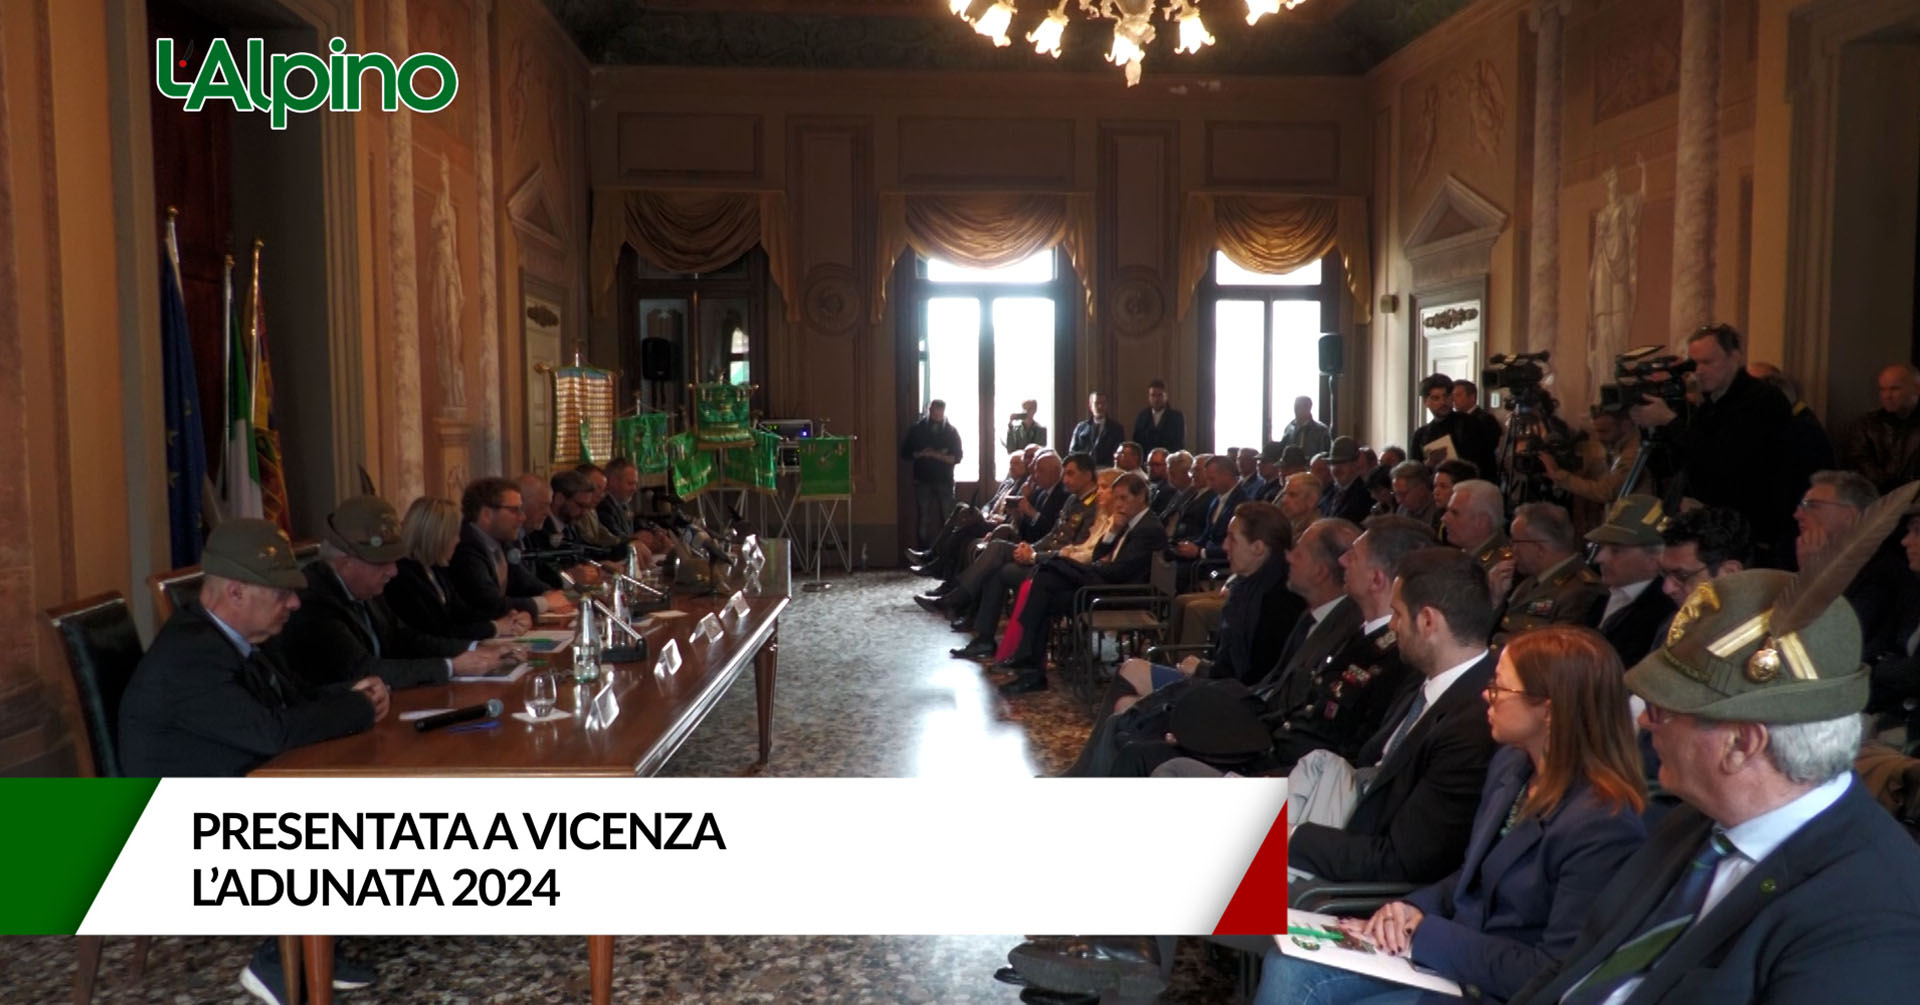 L'Alpino - A Vicenza presentata  L'Adunata 2024